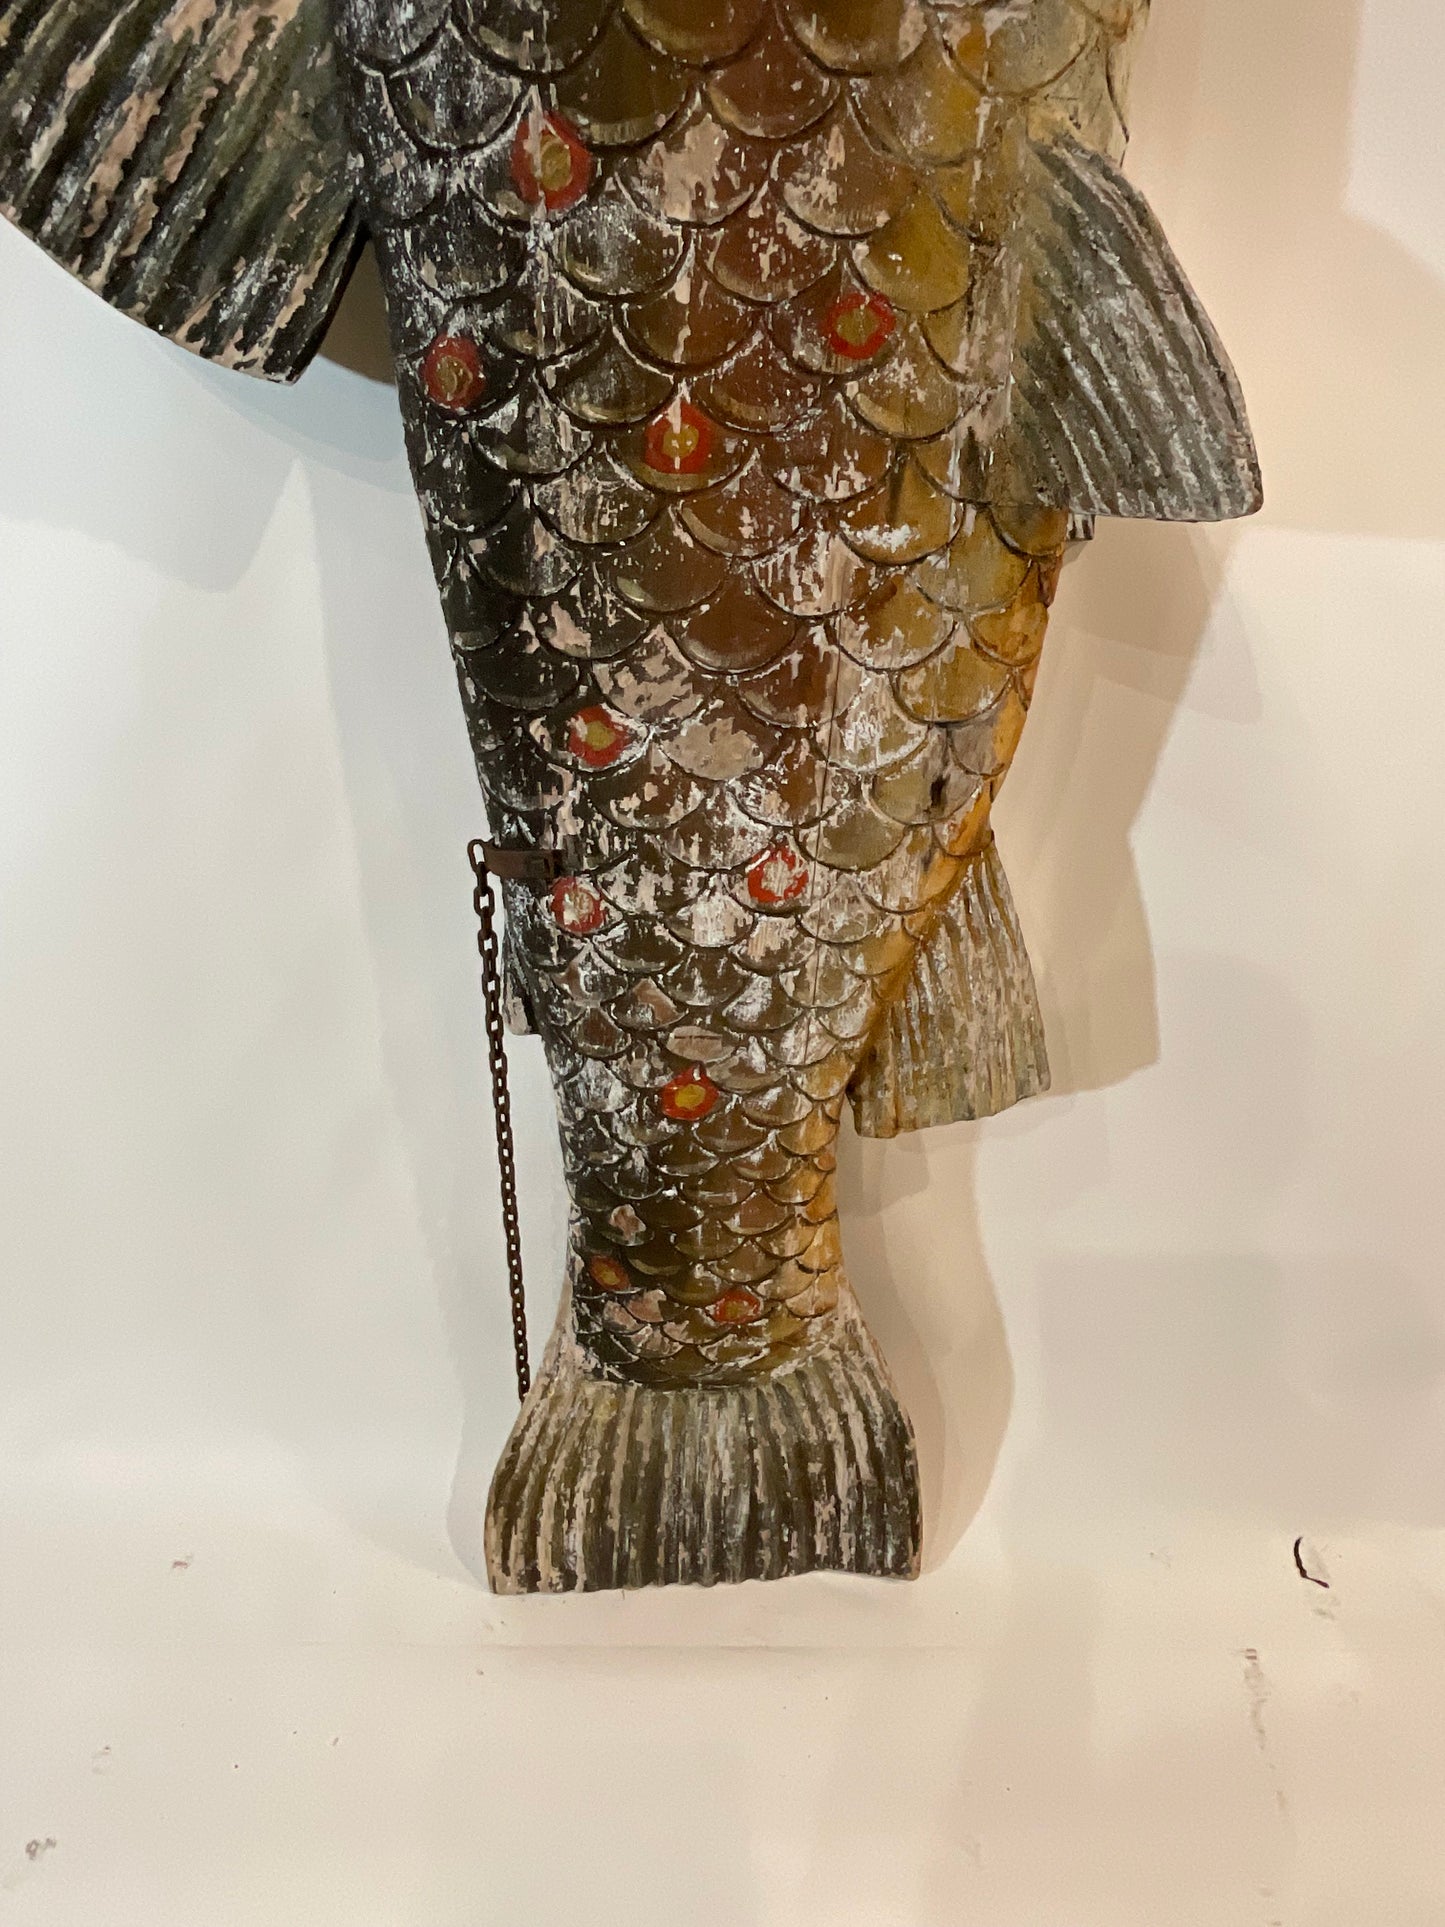 Ten Foot Hanging Wood Fish - Lannan Gallery